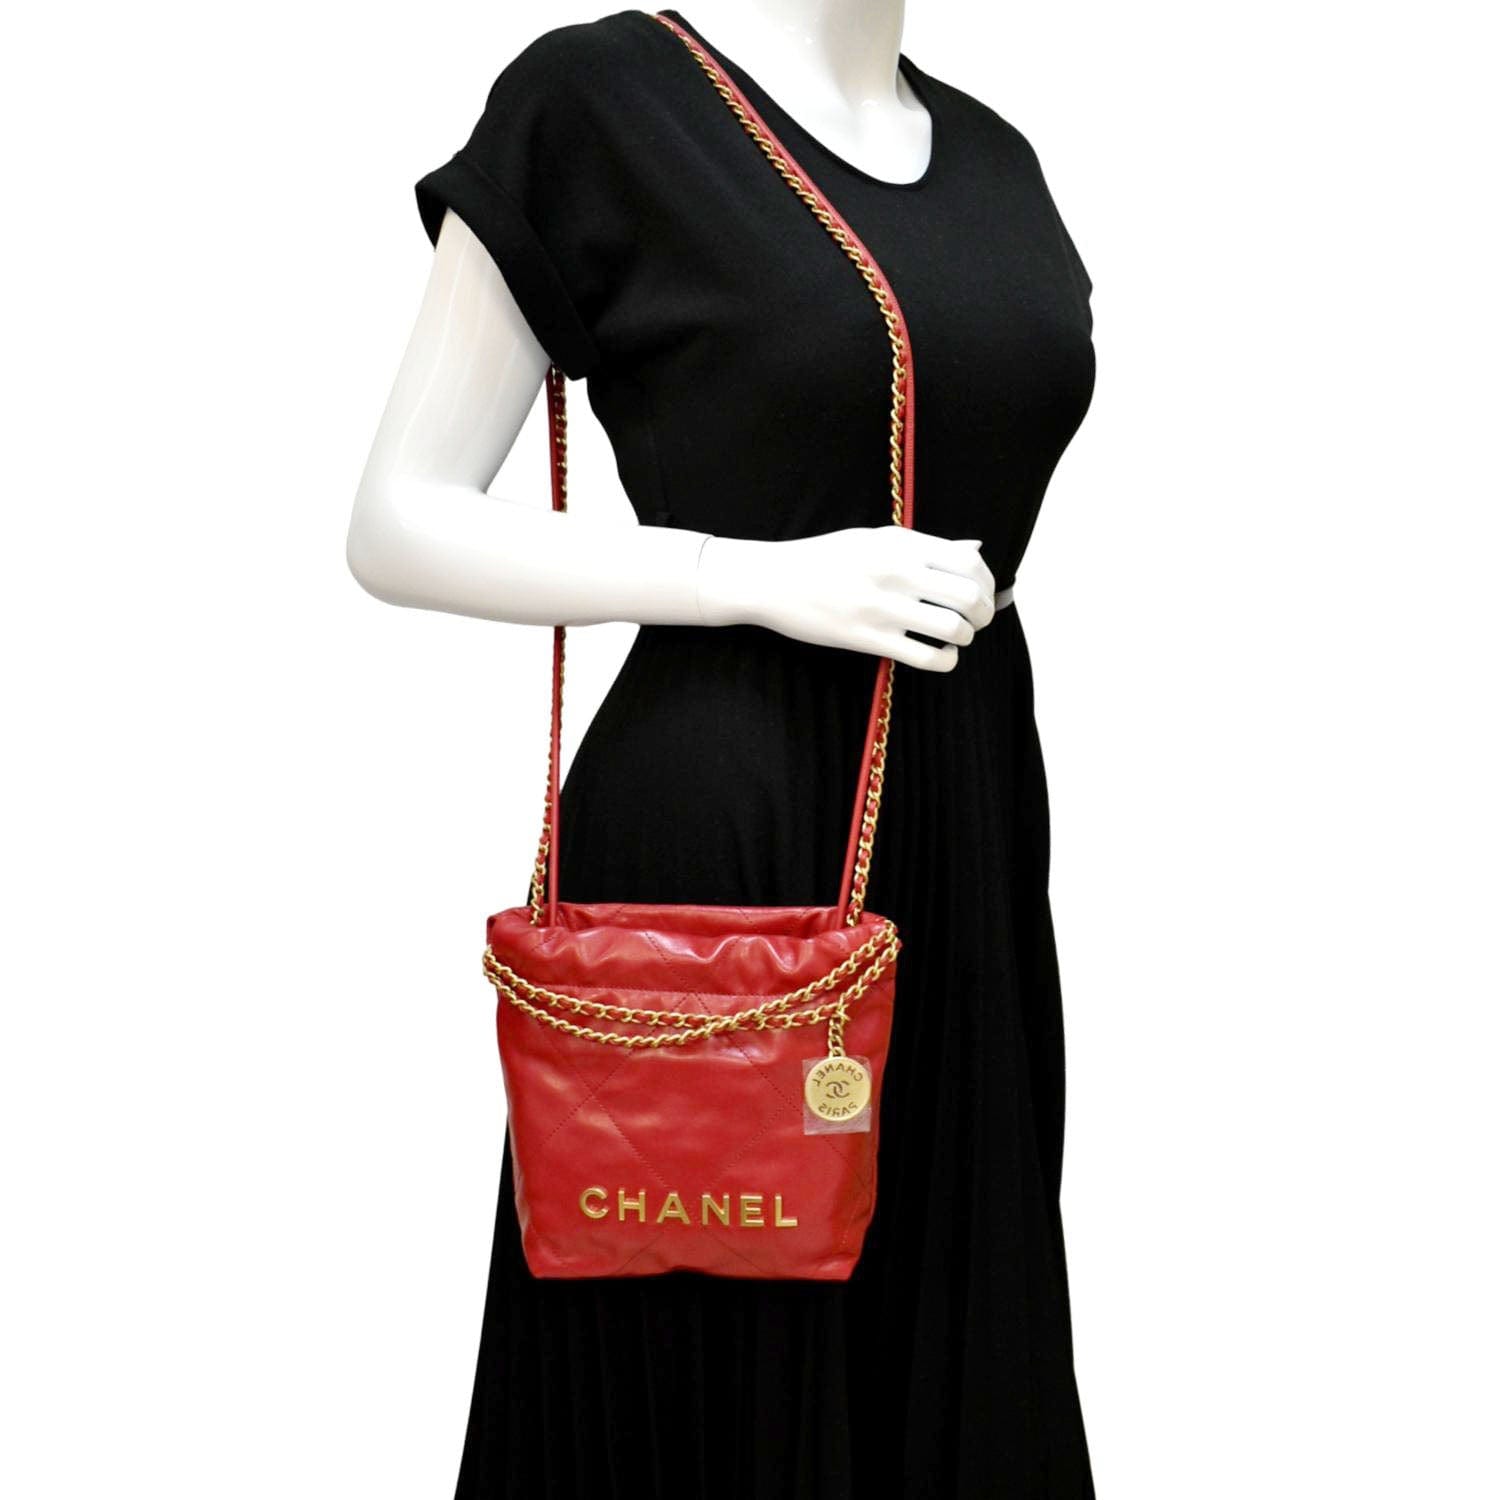 Chanel 22 Mini Chain Shoulder Bag